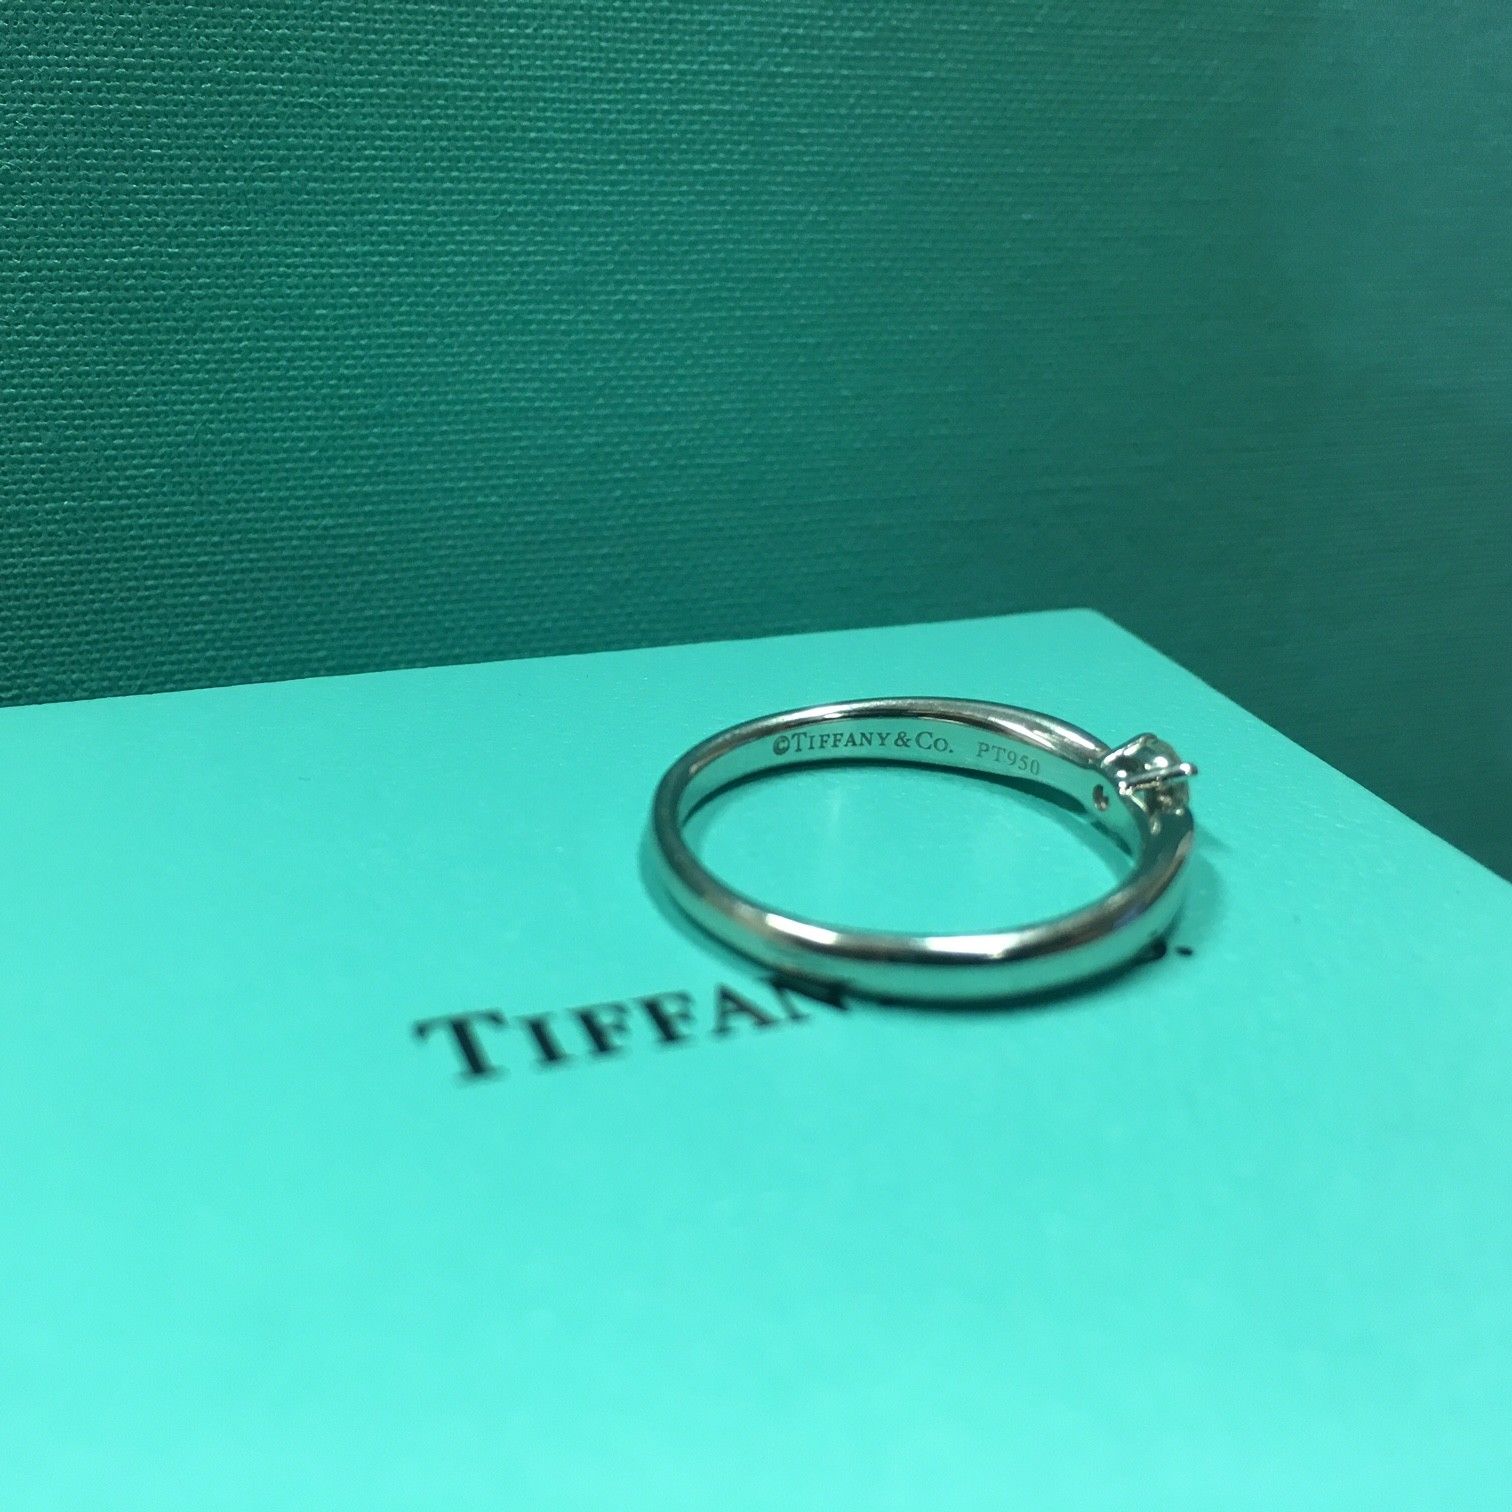 Tiffany & Co. Platinum Diamond Engagement Ring .18ct